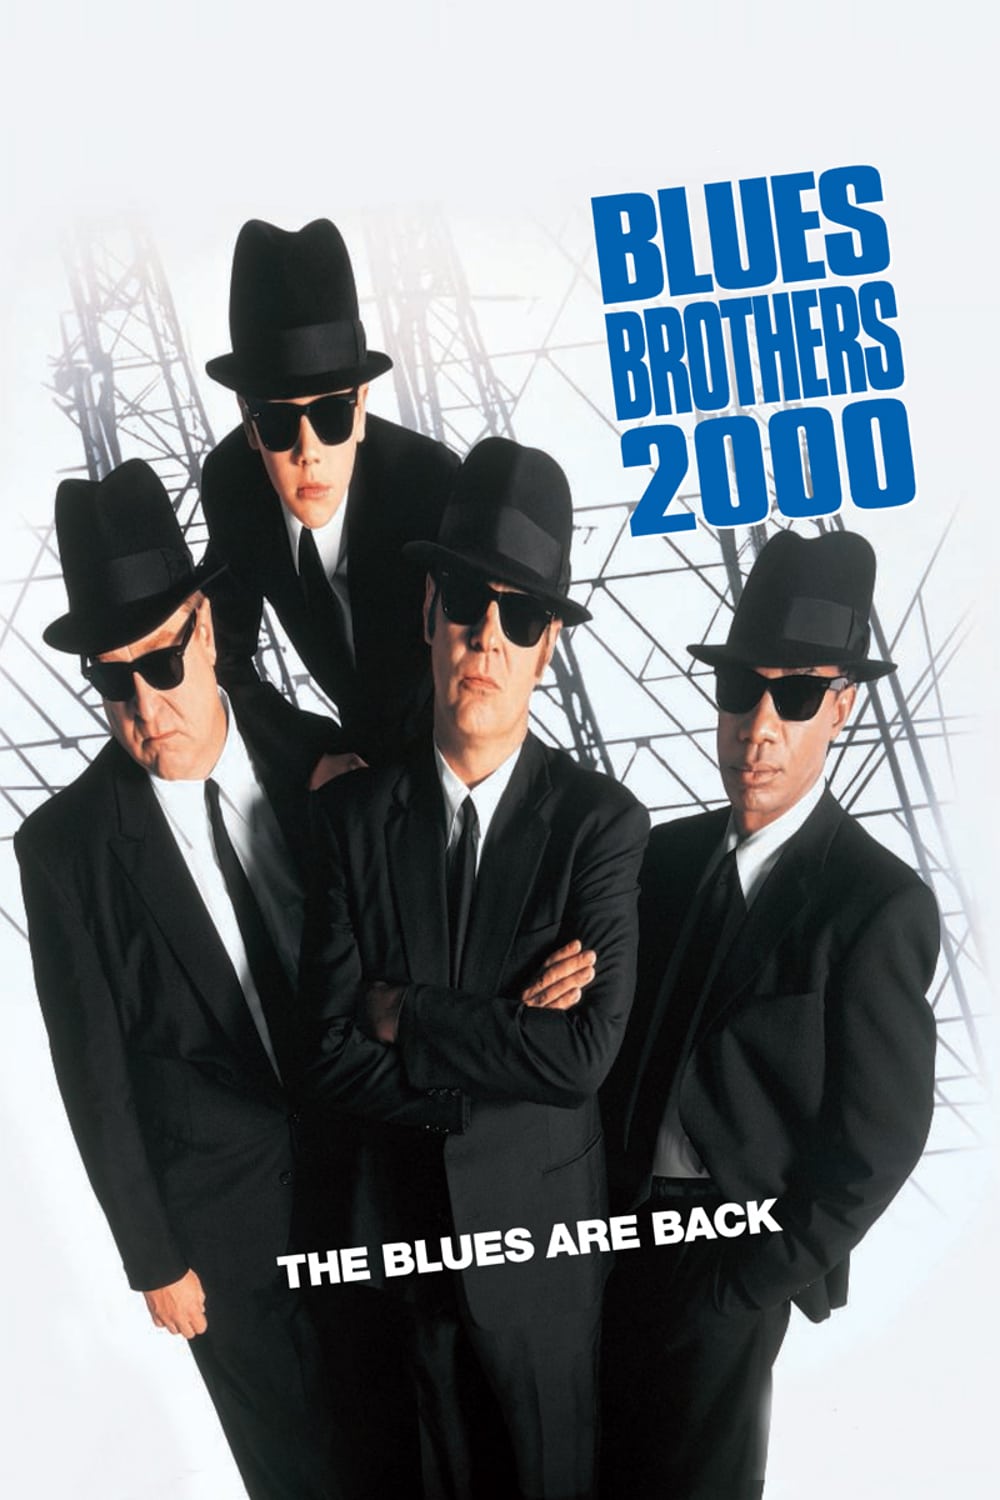 Plakat von "Blues Brothers 2000"